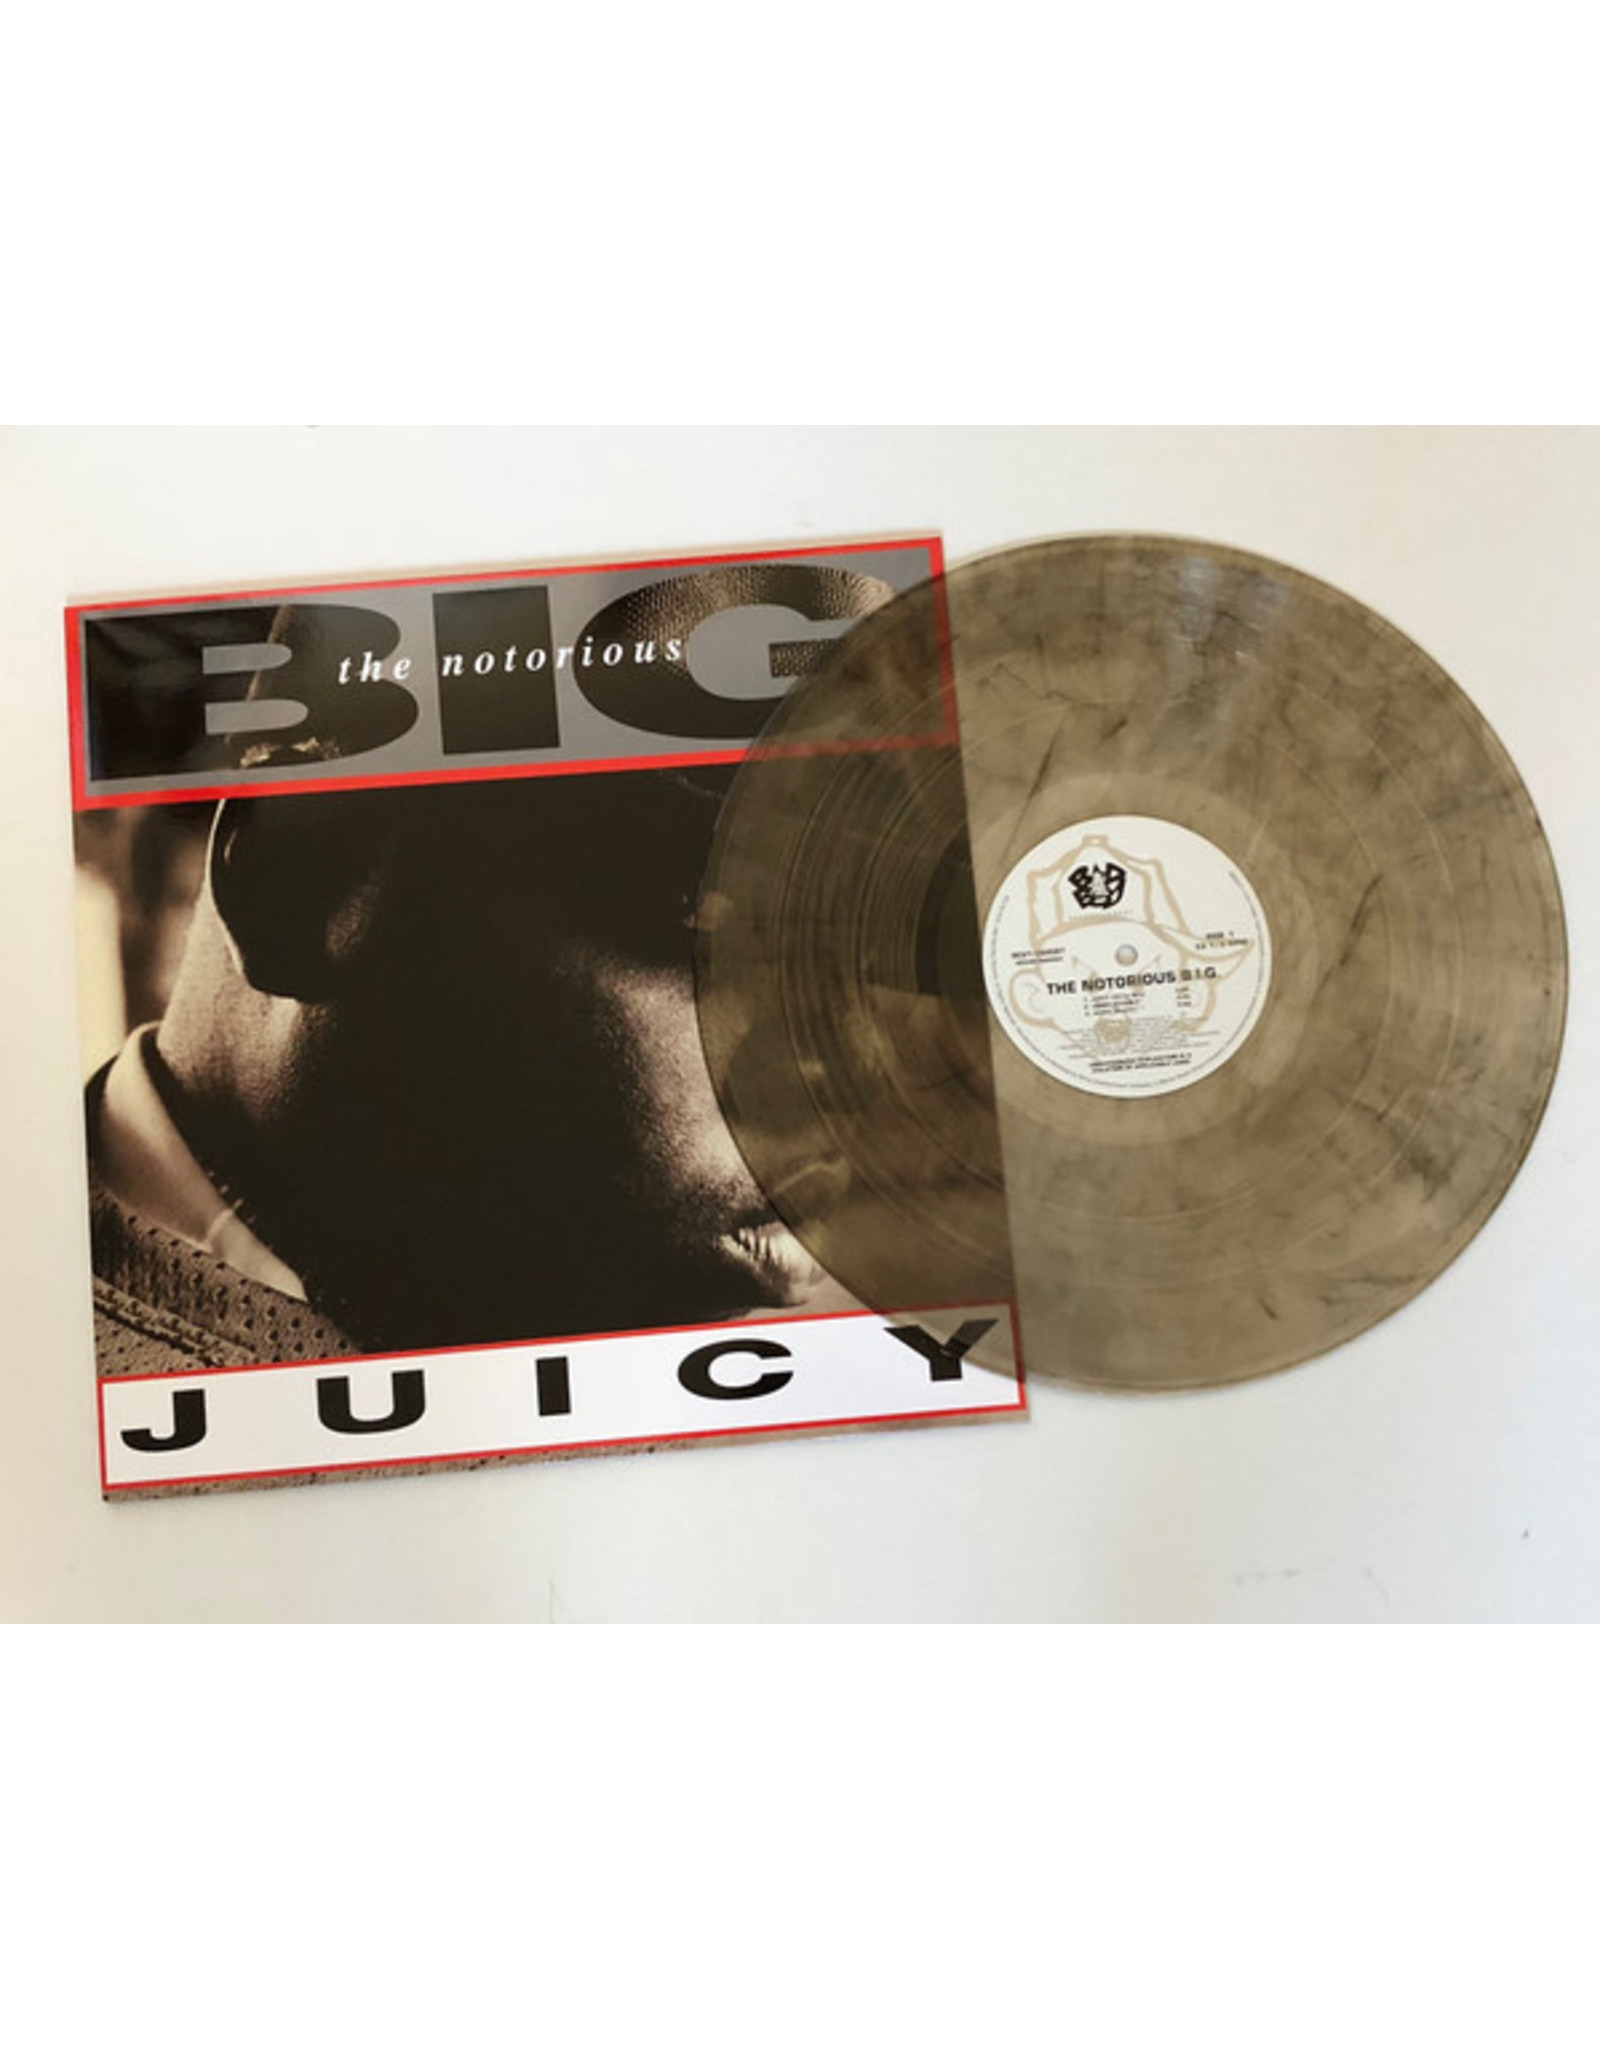 Notorious B.I.G. - Juicy (12" Single) [Black / Clear Swirl Vinyl]